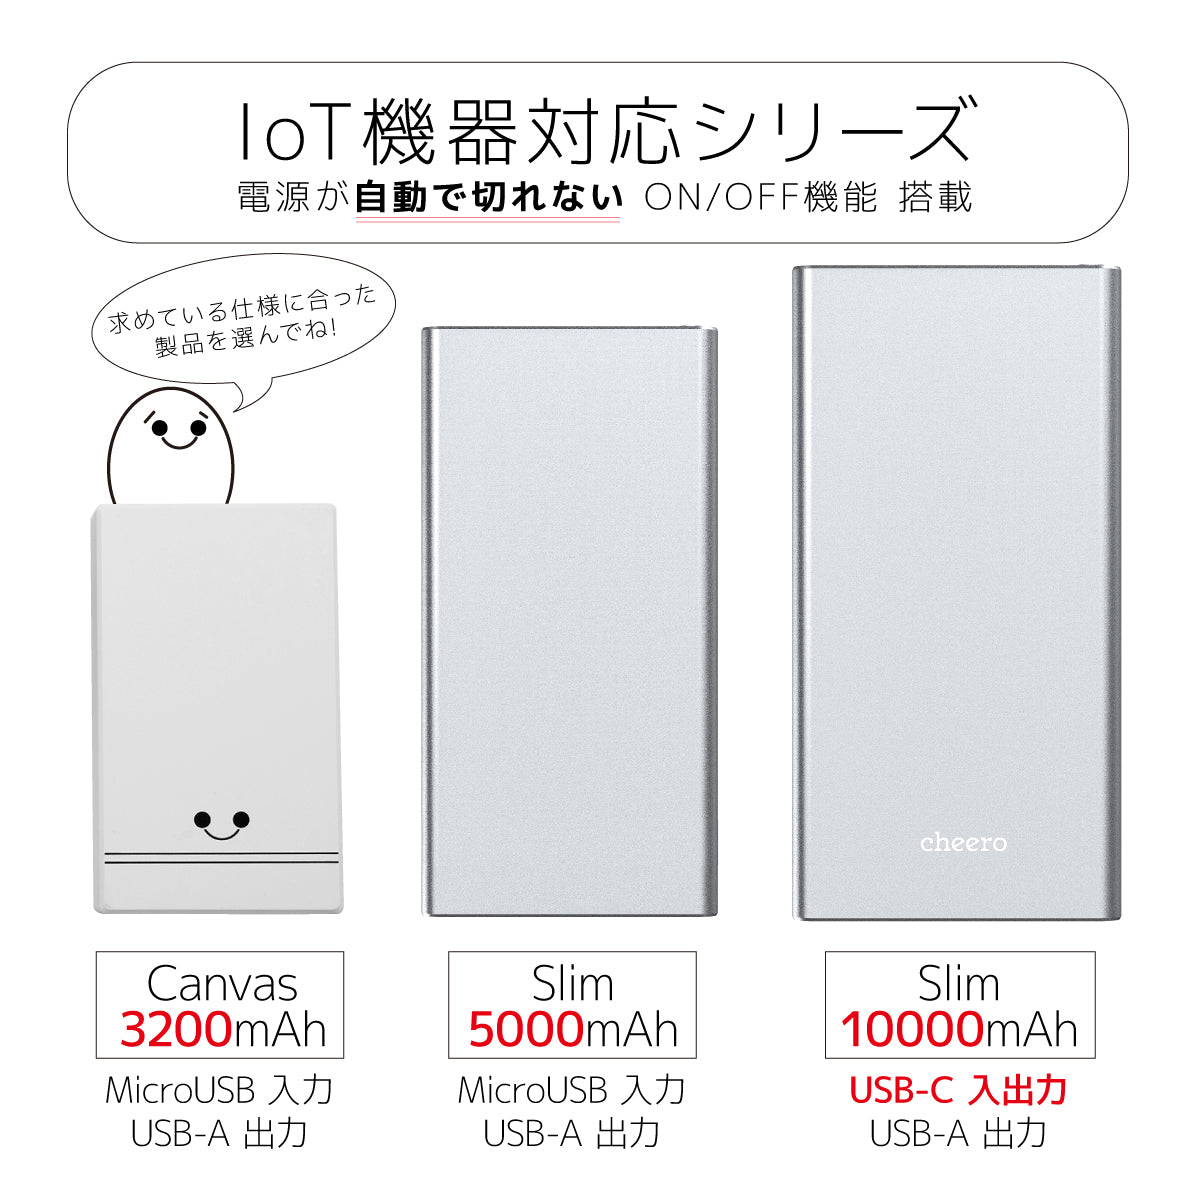 cheero Canvas 3200mAh IoT機器対応【USB-C Ver.】